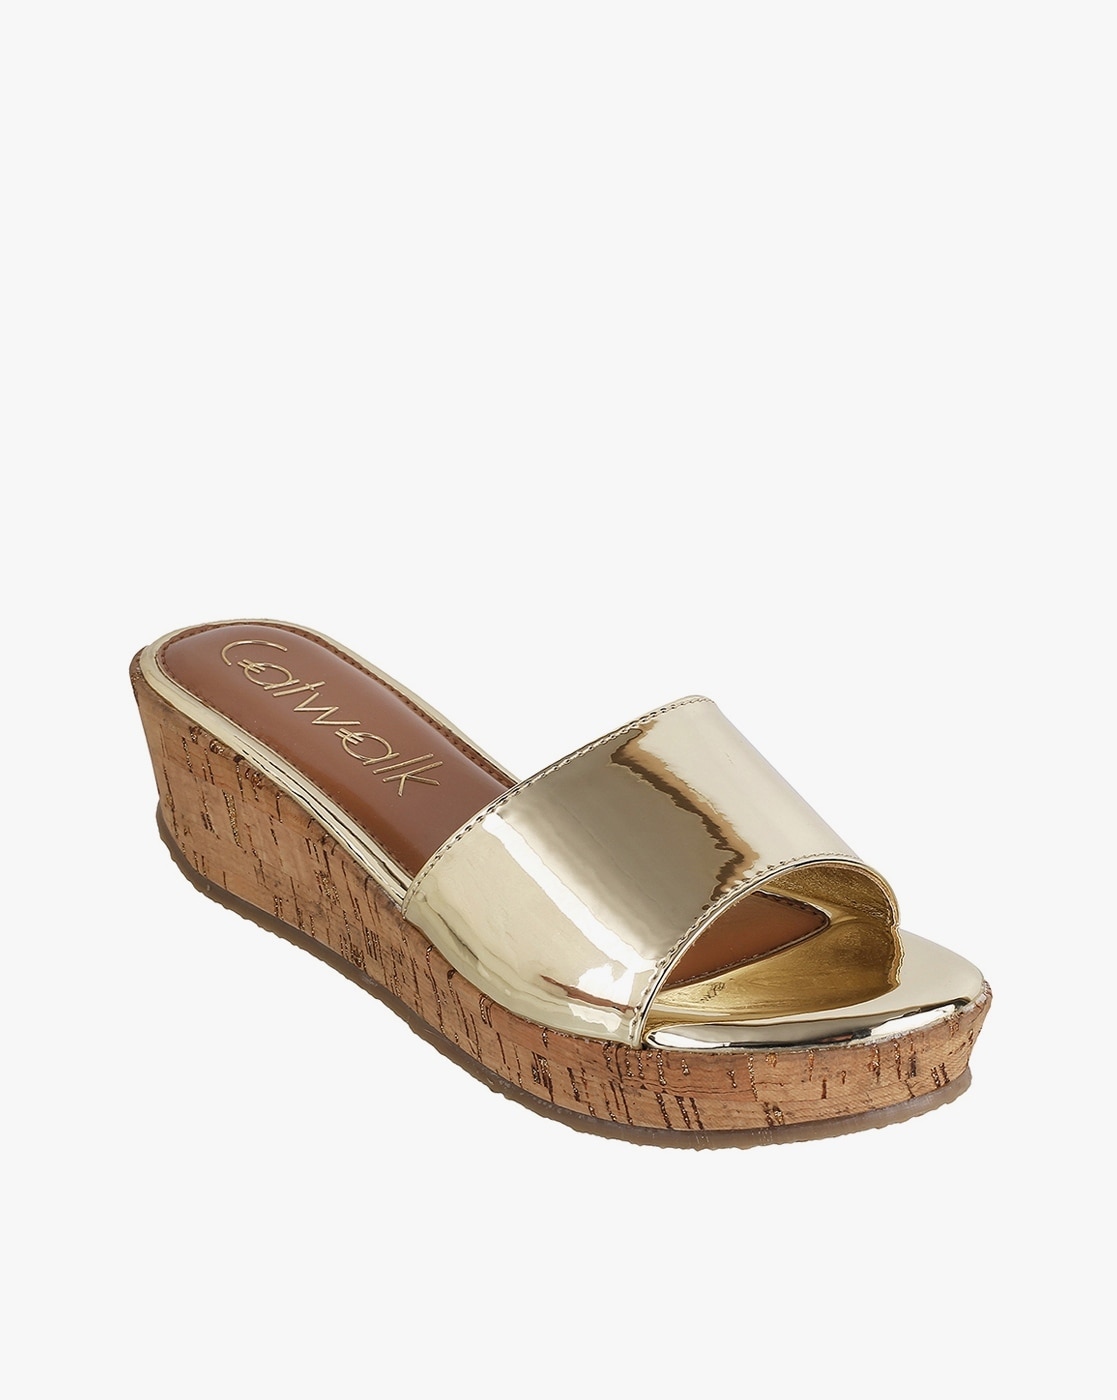 Hologrpahic Flatform Sandals : Amazon.in: Shoes & Handbags